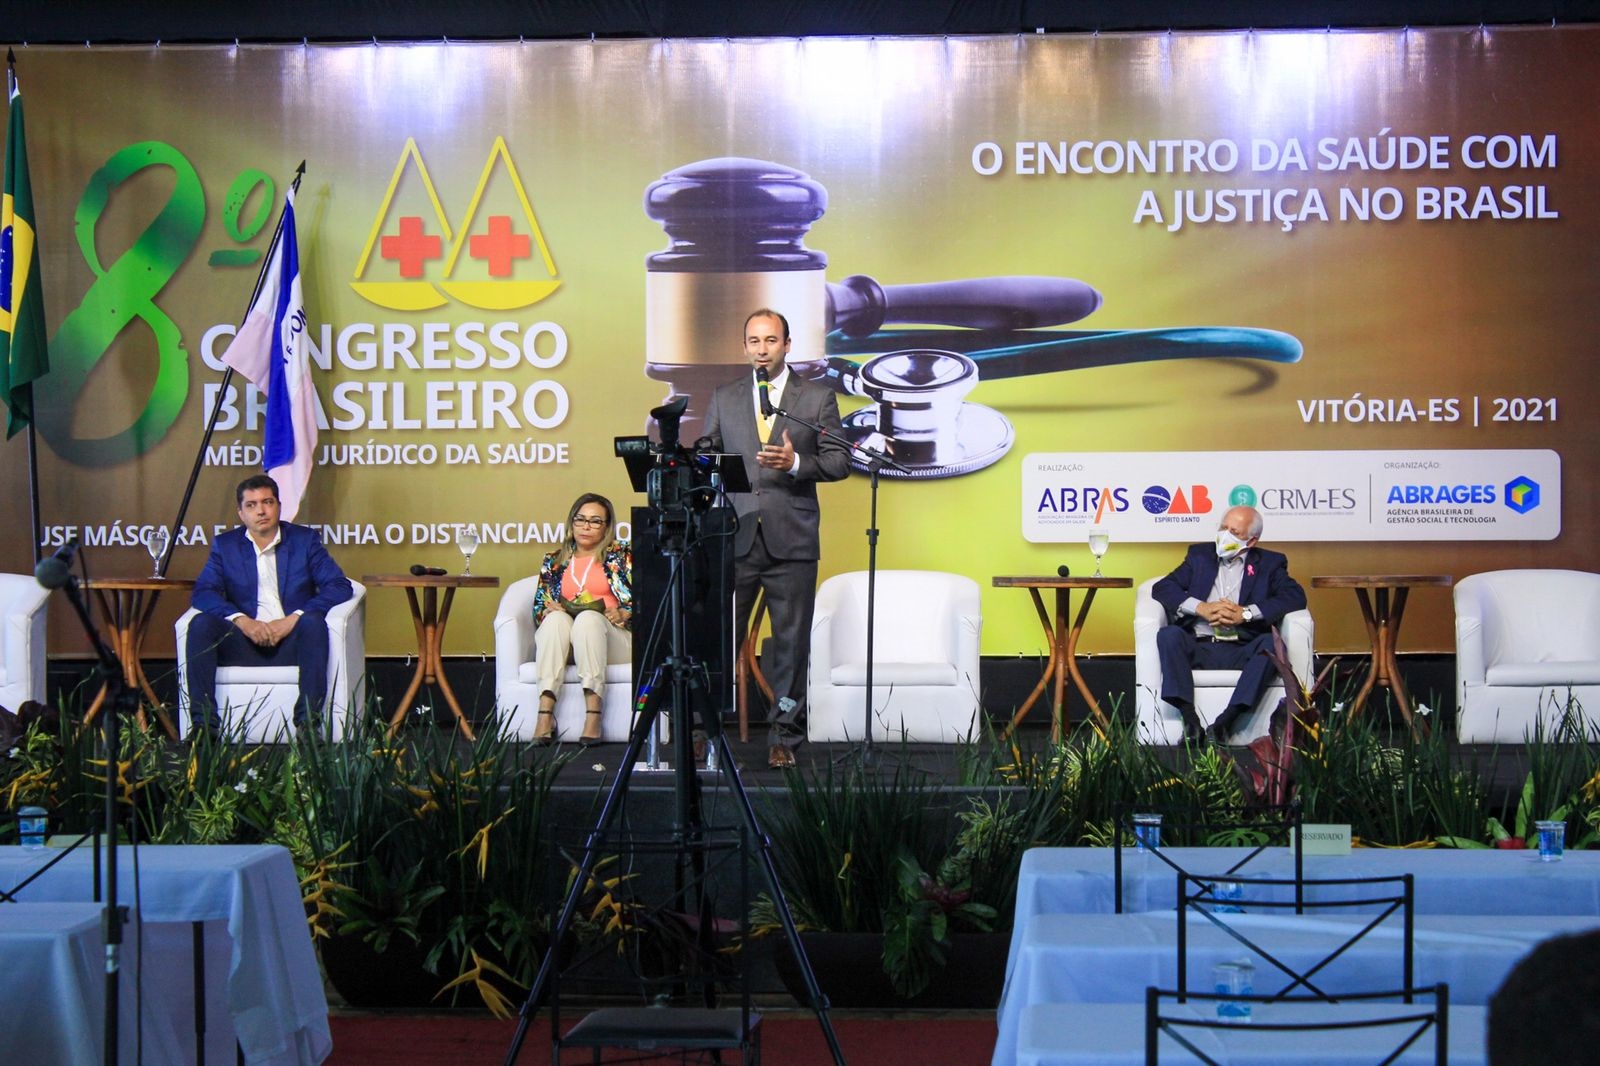 8 congresso brasileiro medico juridico da saude 6